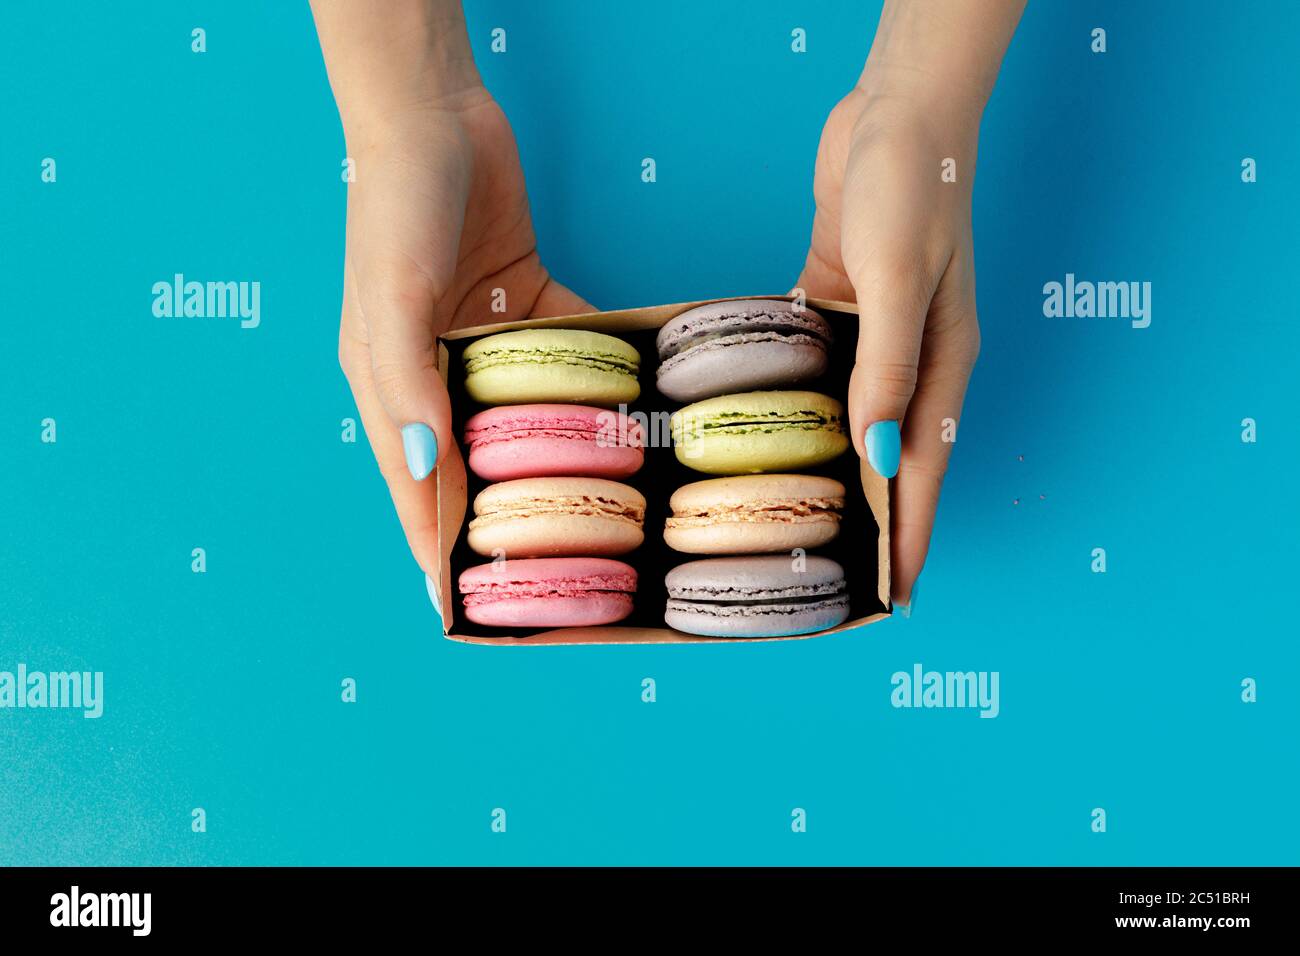 Damen Hände halten Box mit bunten Makronen-Cookies Stockfoto